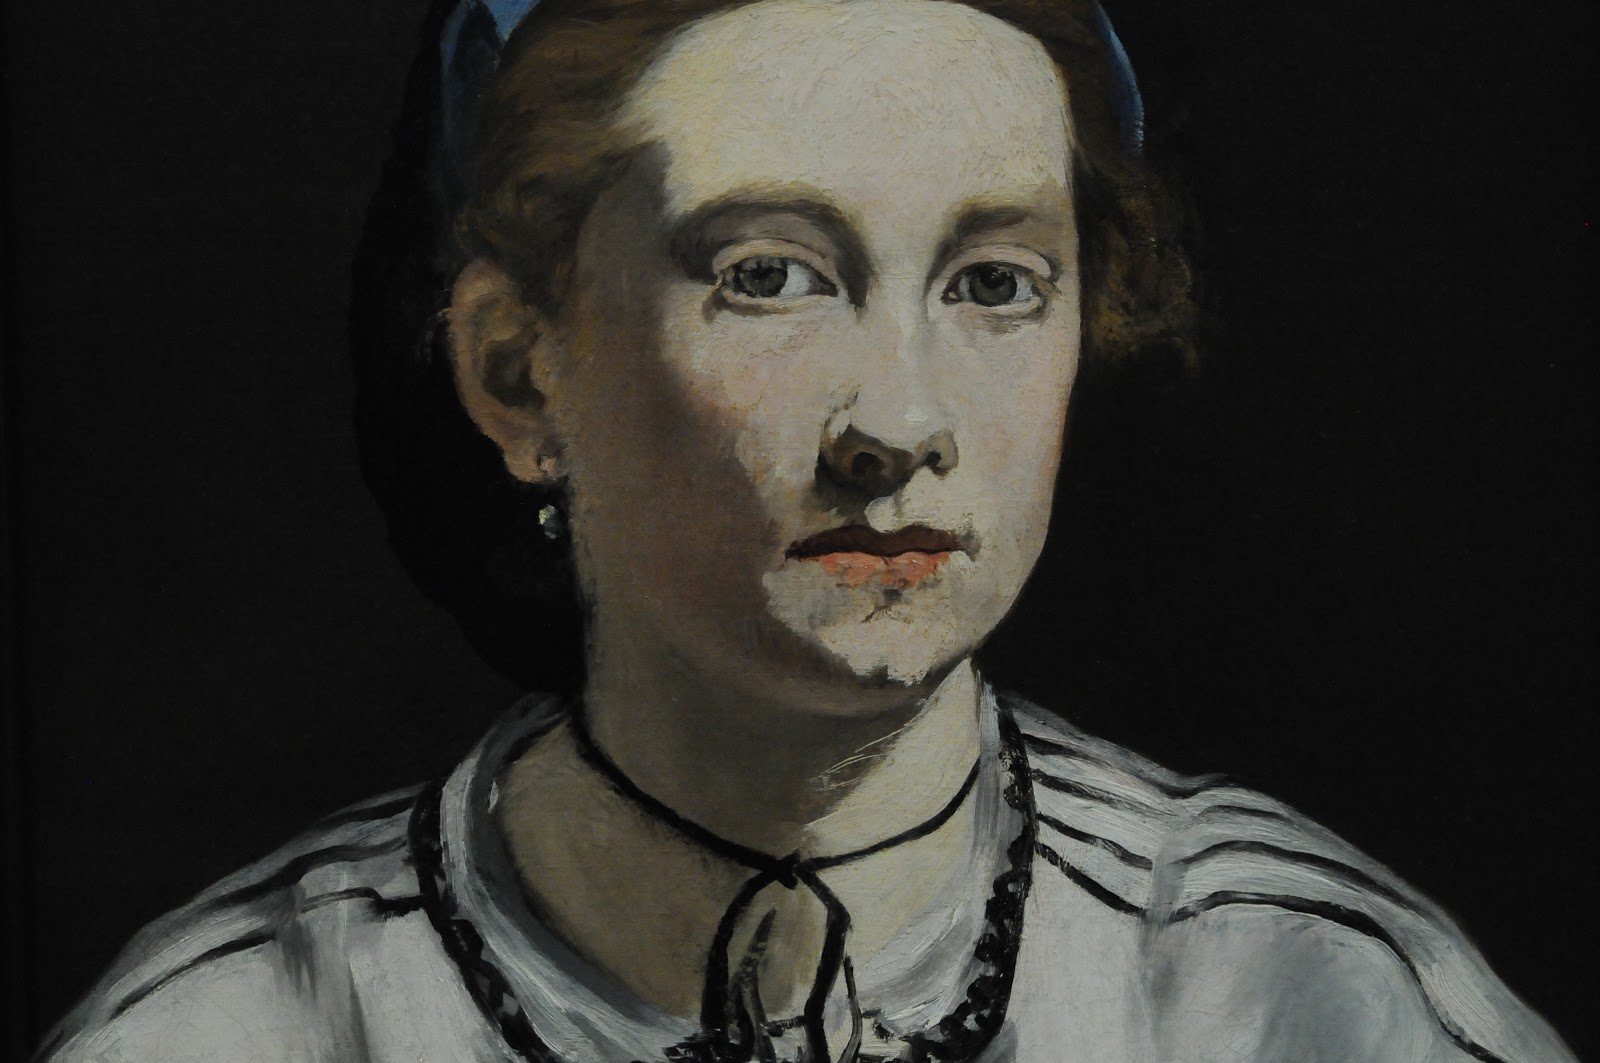 Edouard+Manet-1832-1883 (69).jpg